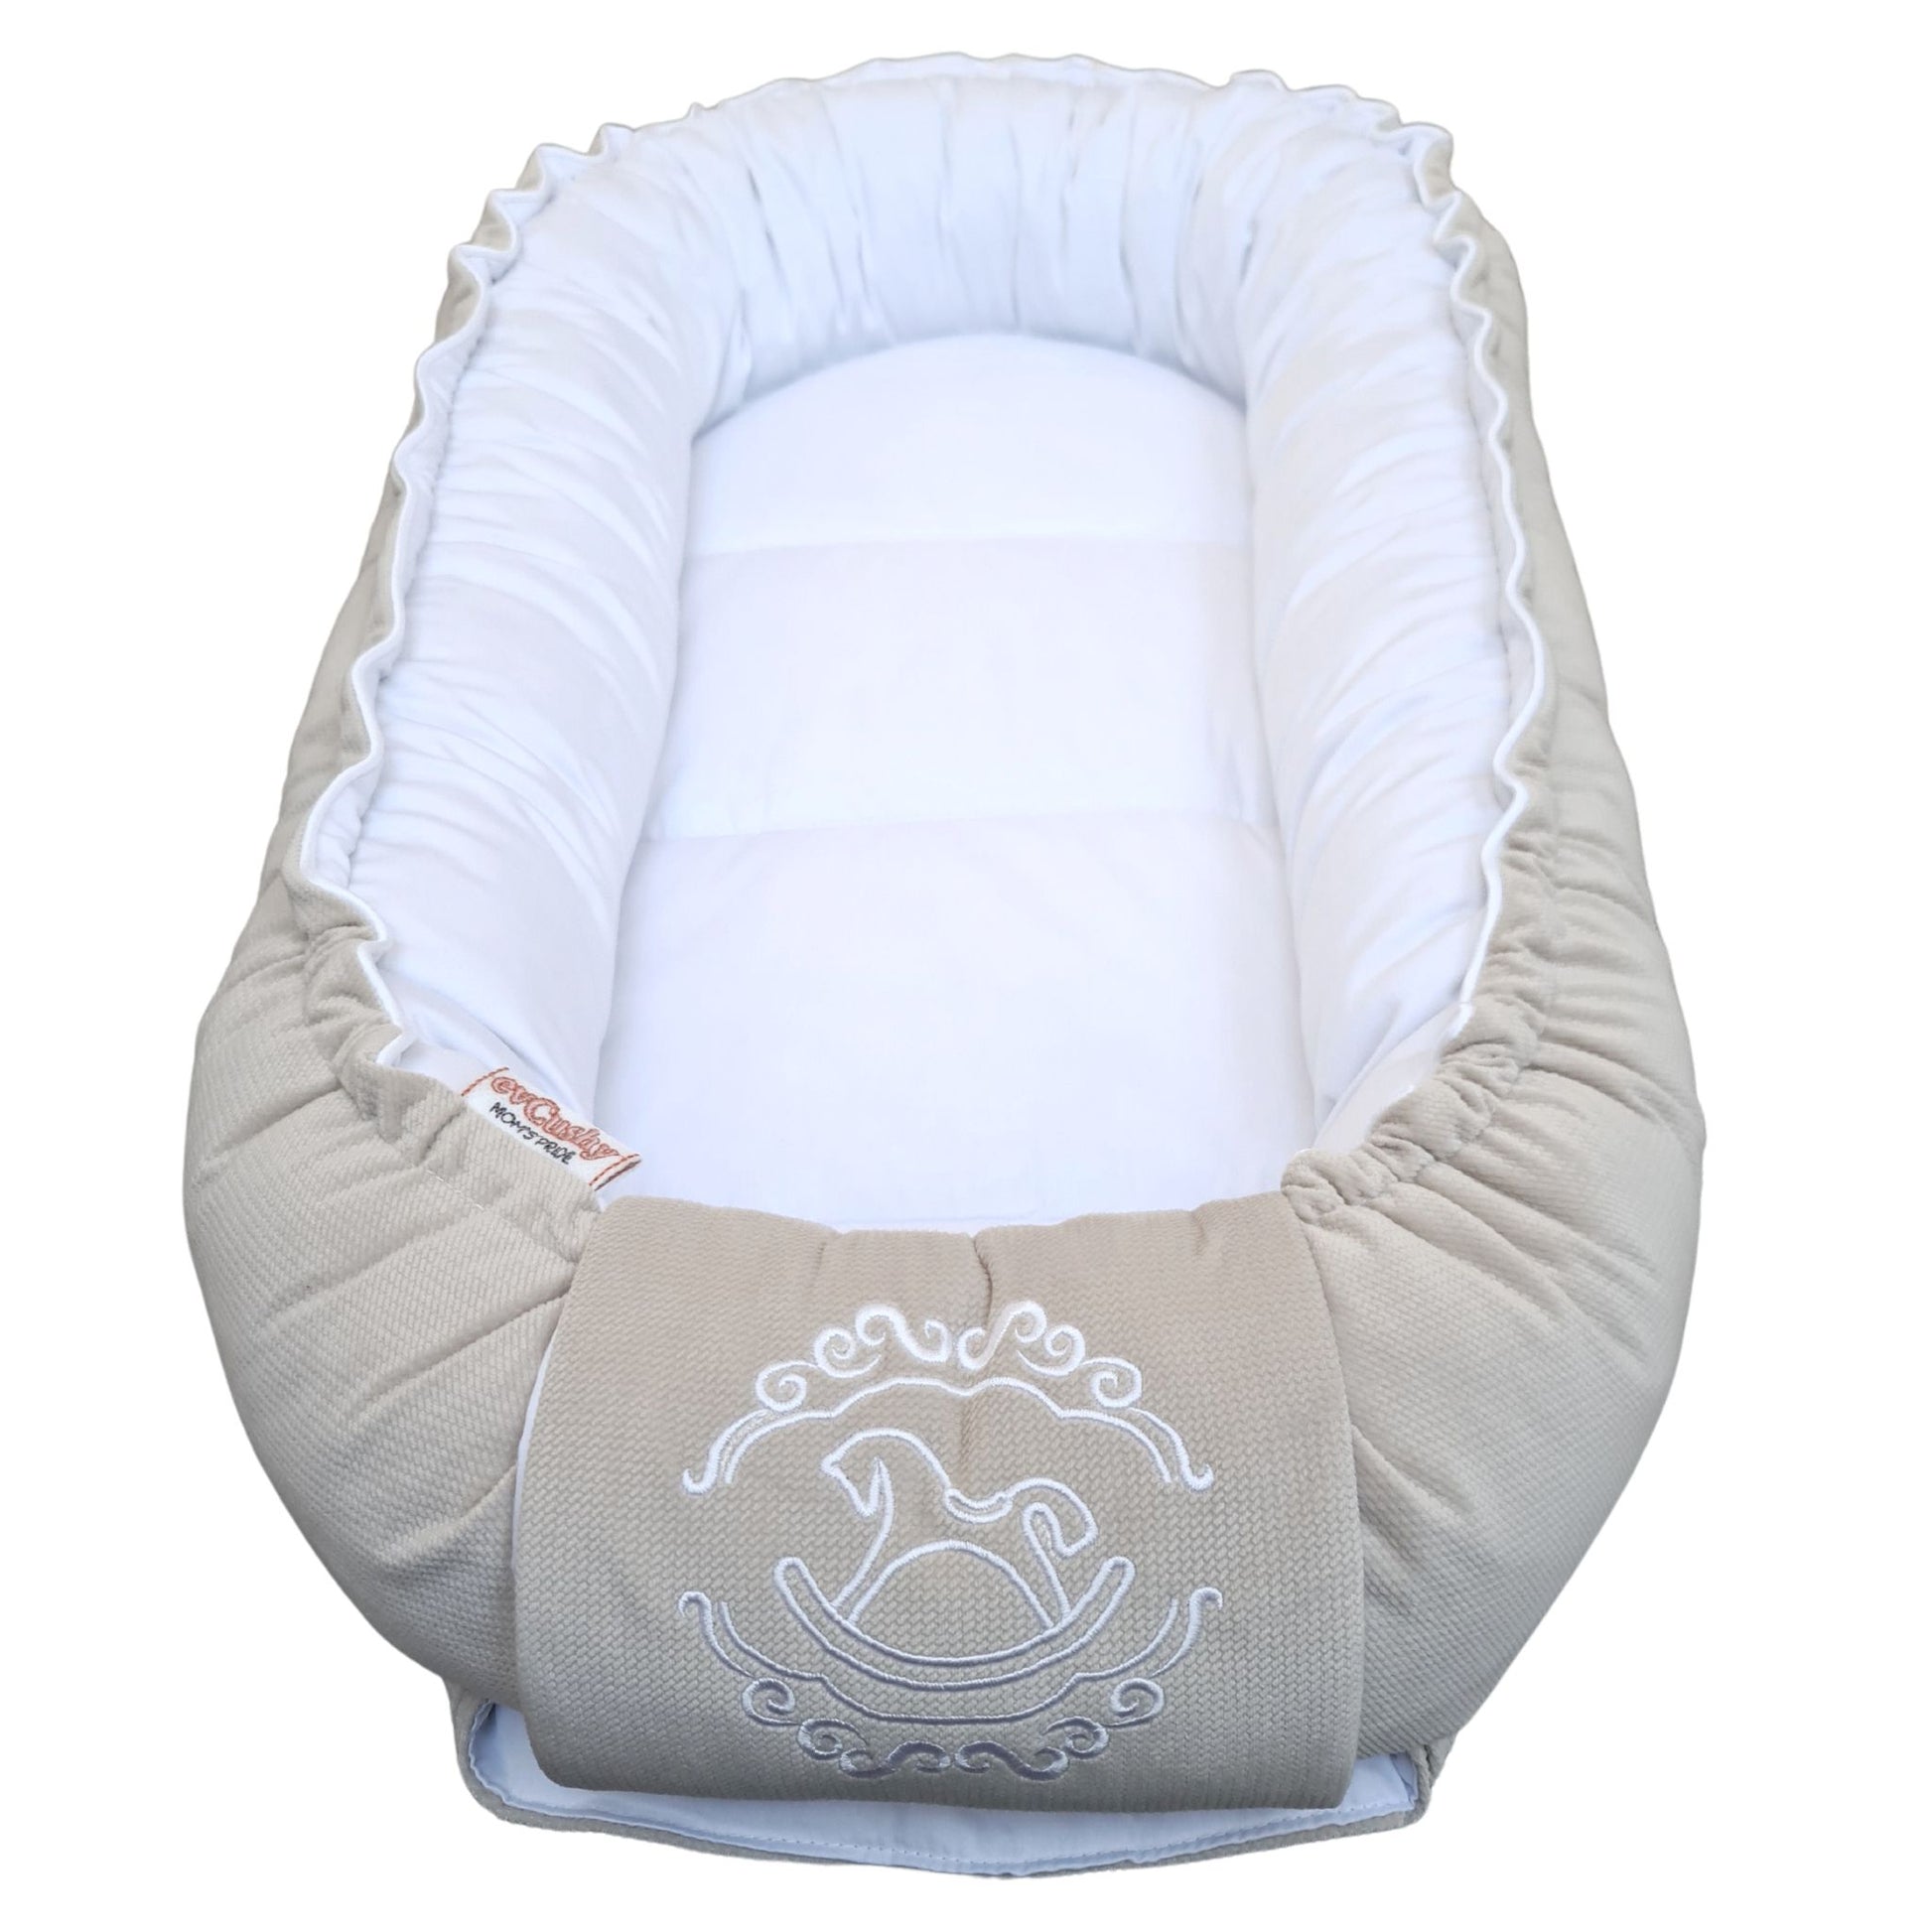 Baby nest sleep pod lounger beige velvet white cotton with rocking horse